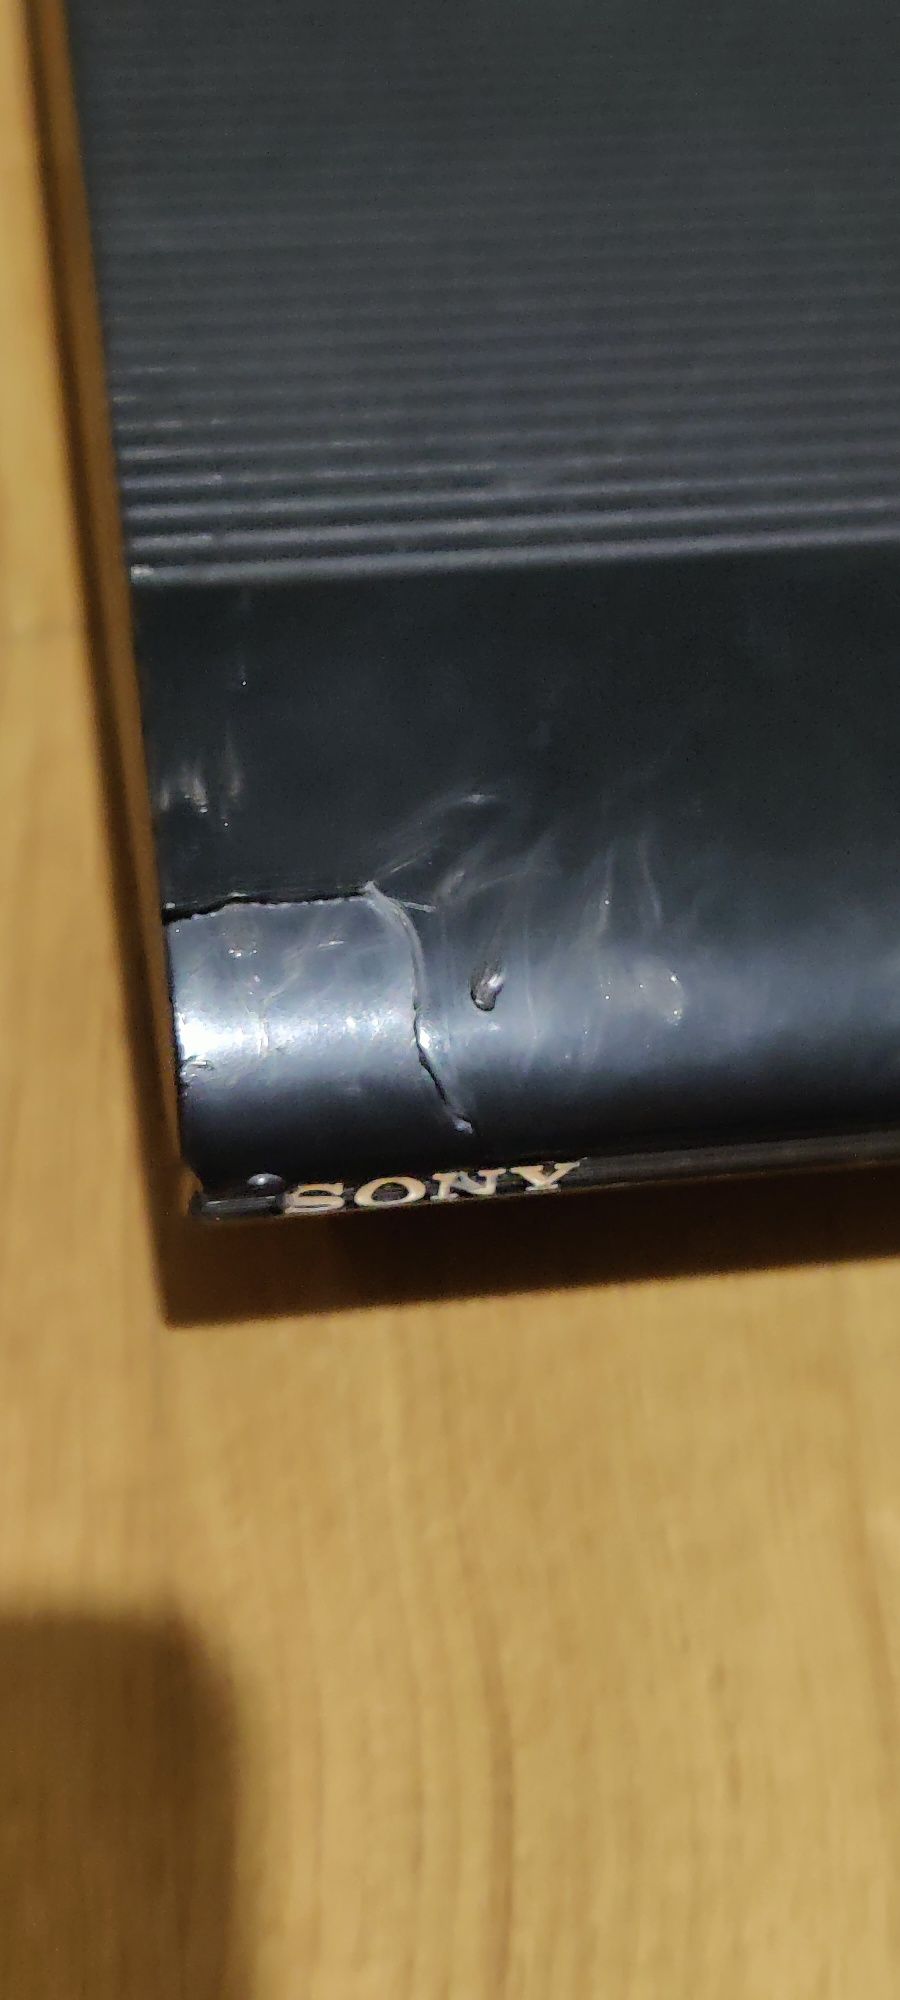 Sony PlayStation 3 syper slim